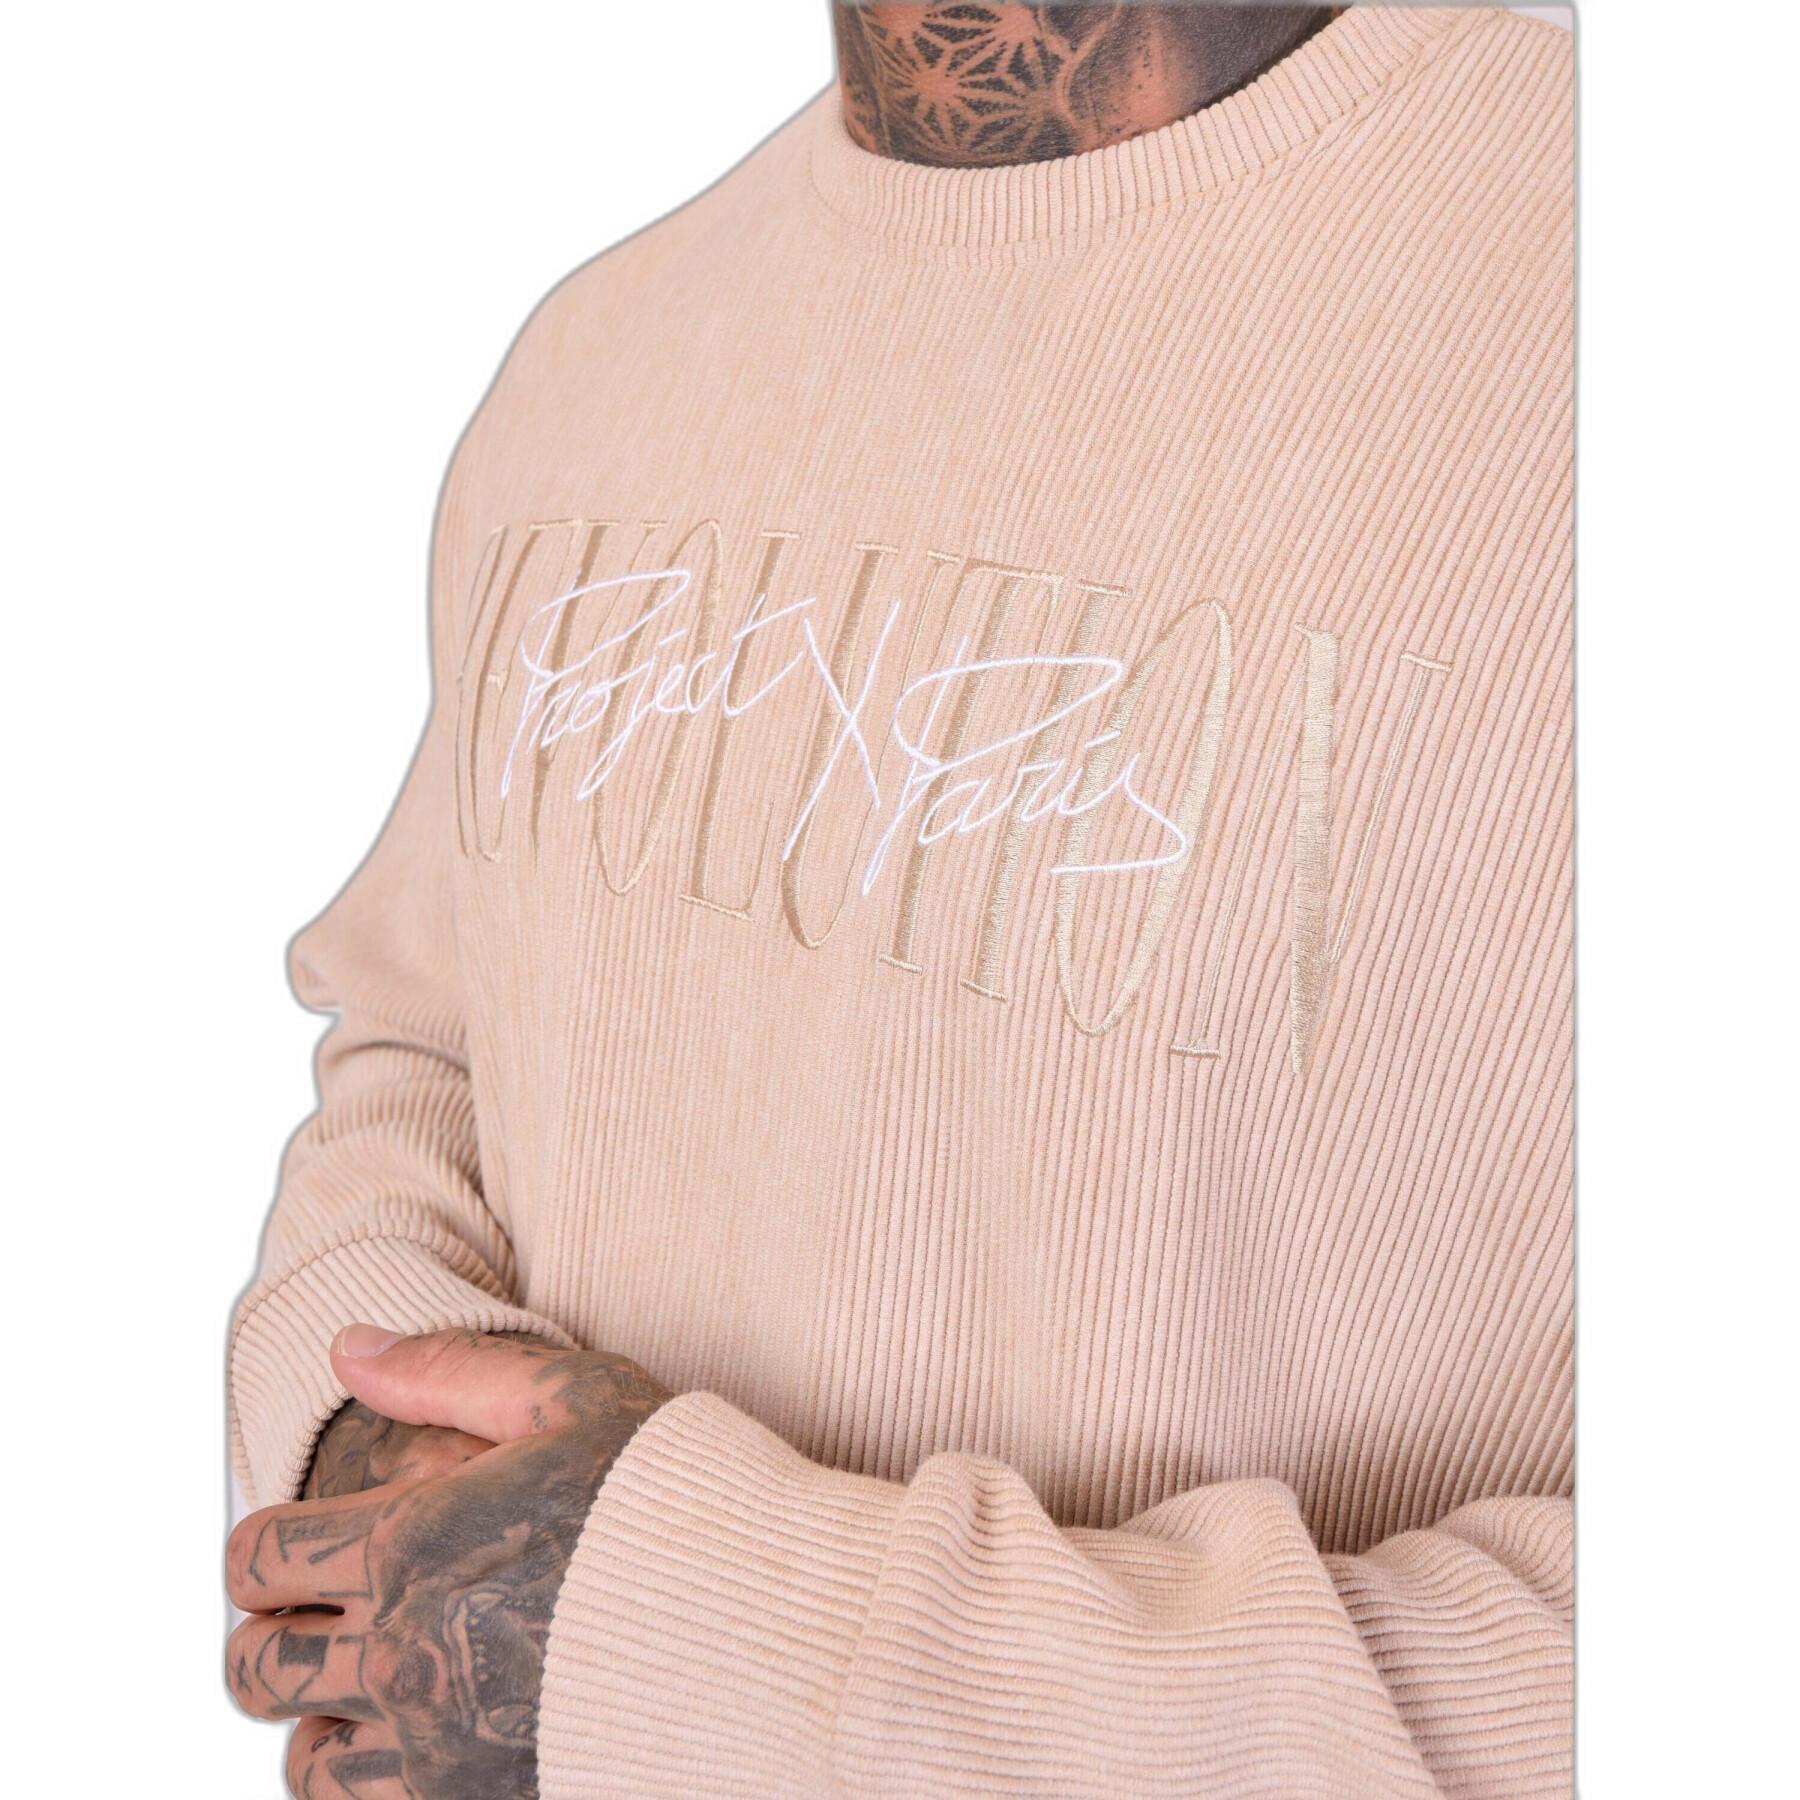 Hooded sweatshirt Project X Paris Revolution